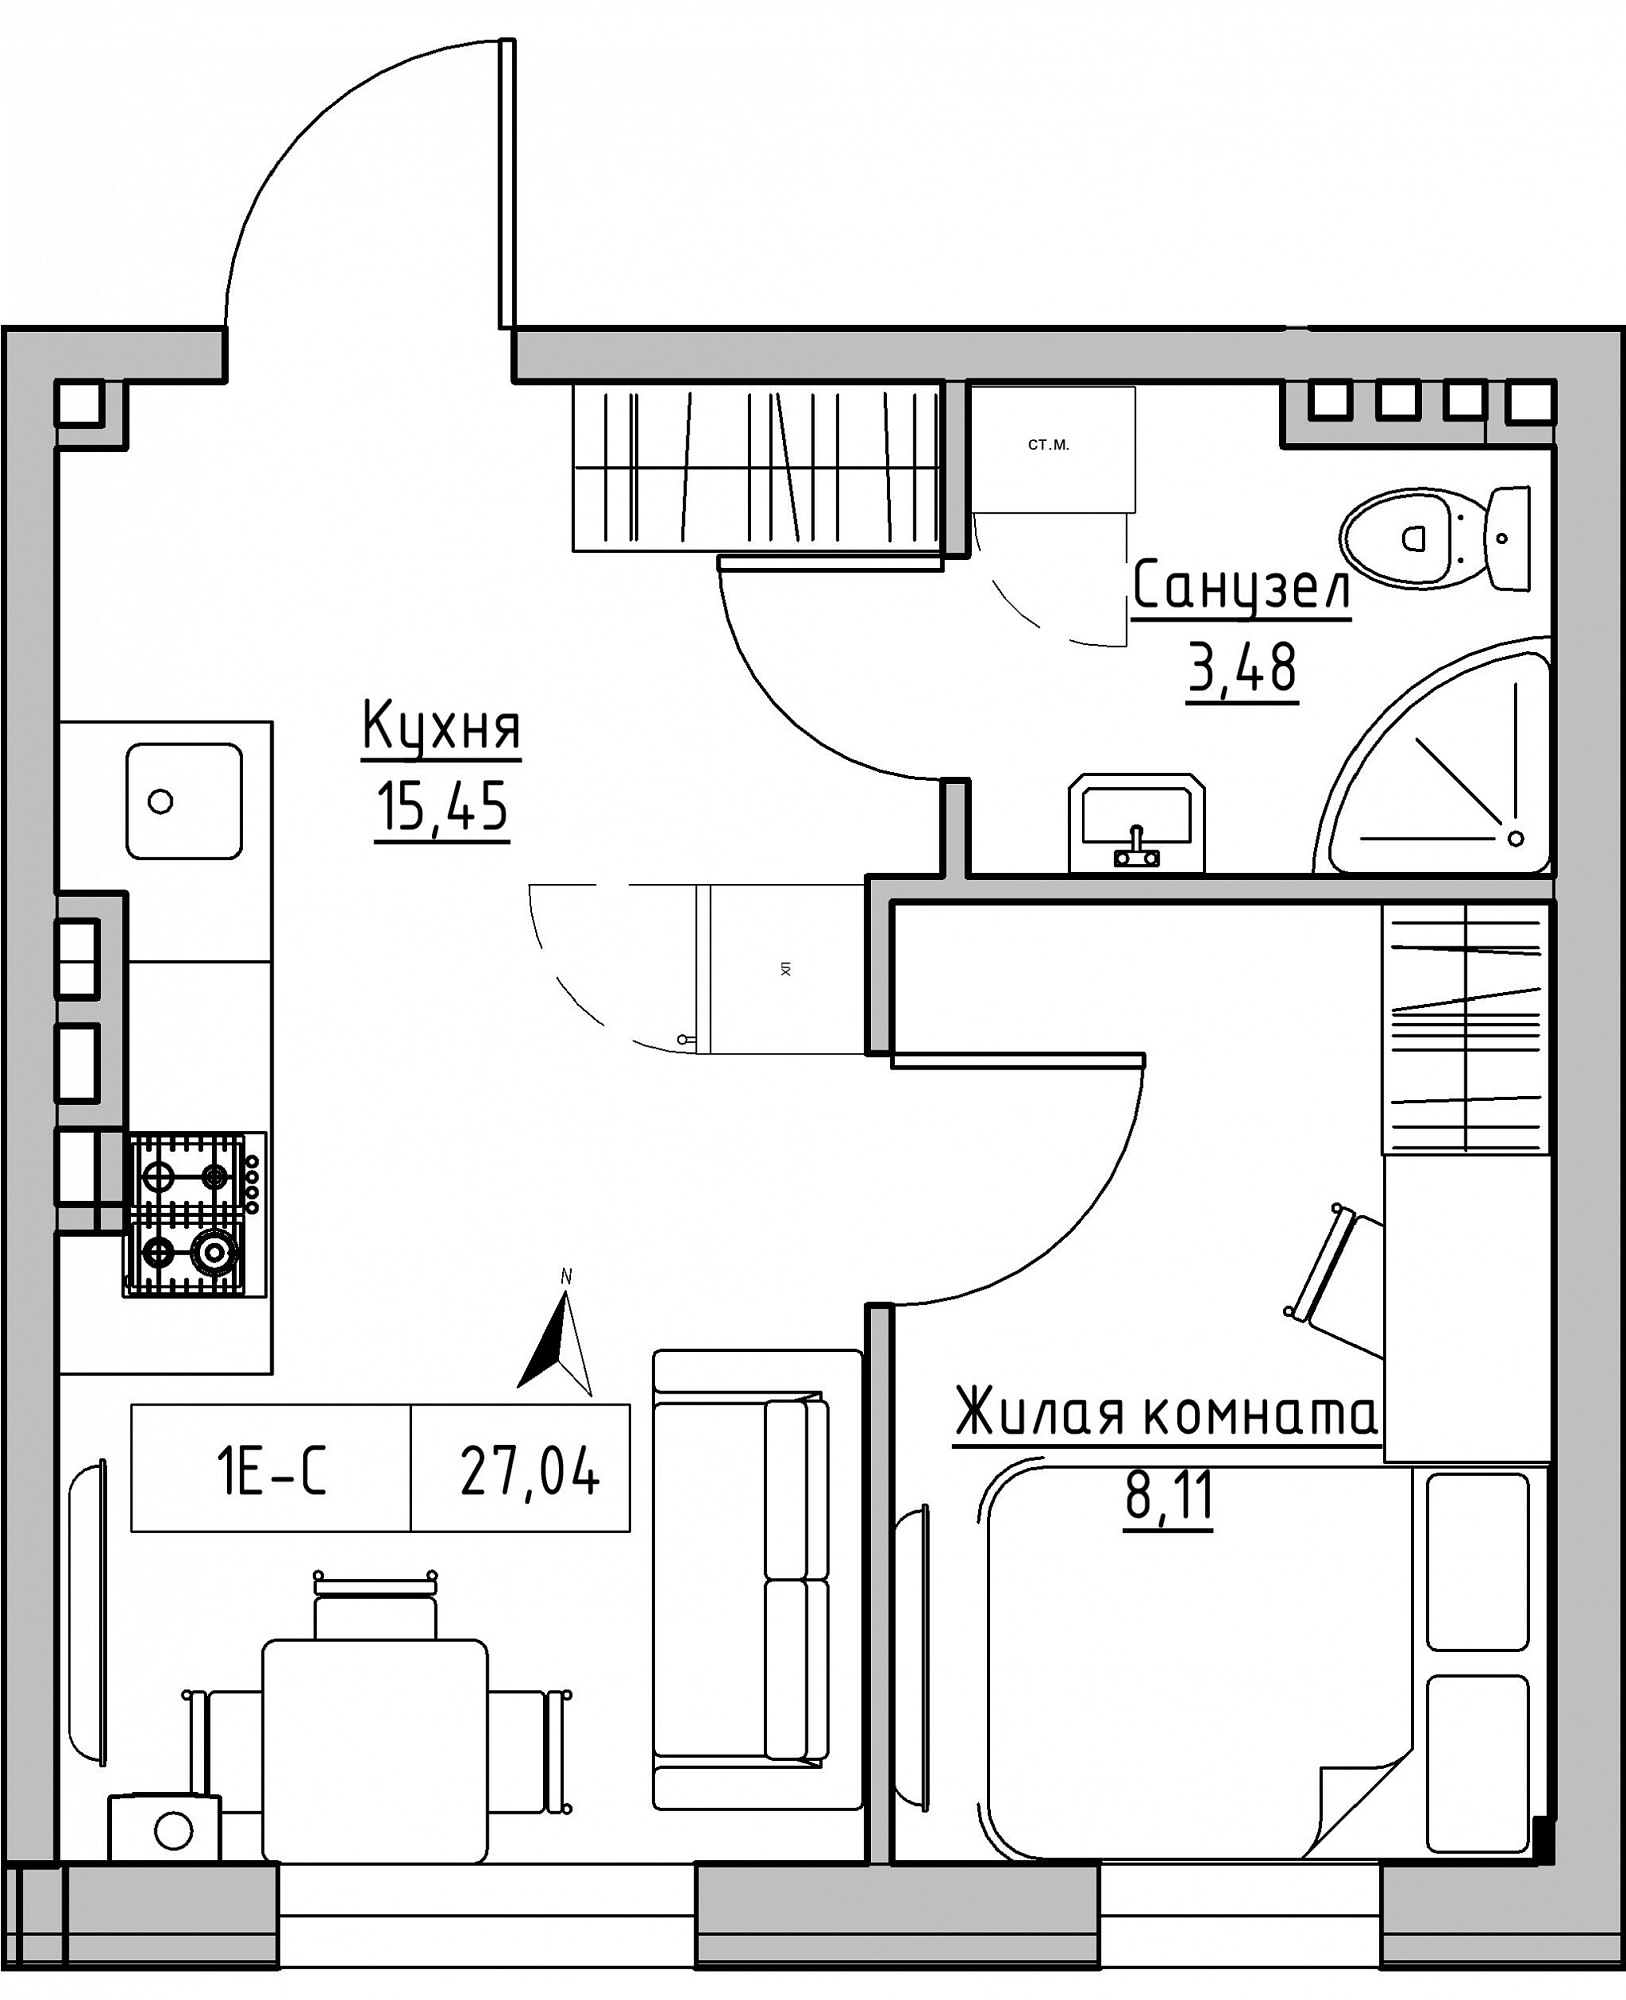 Planning 1-rm flats area 27.04m2, KS-024-05/0004.